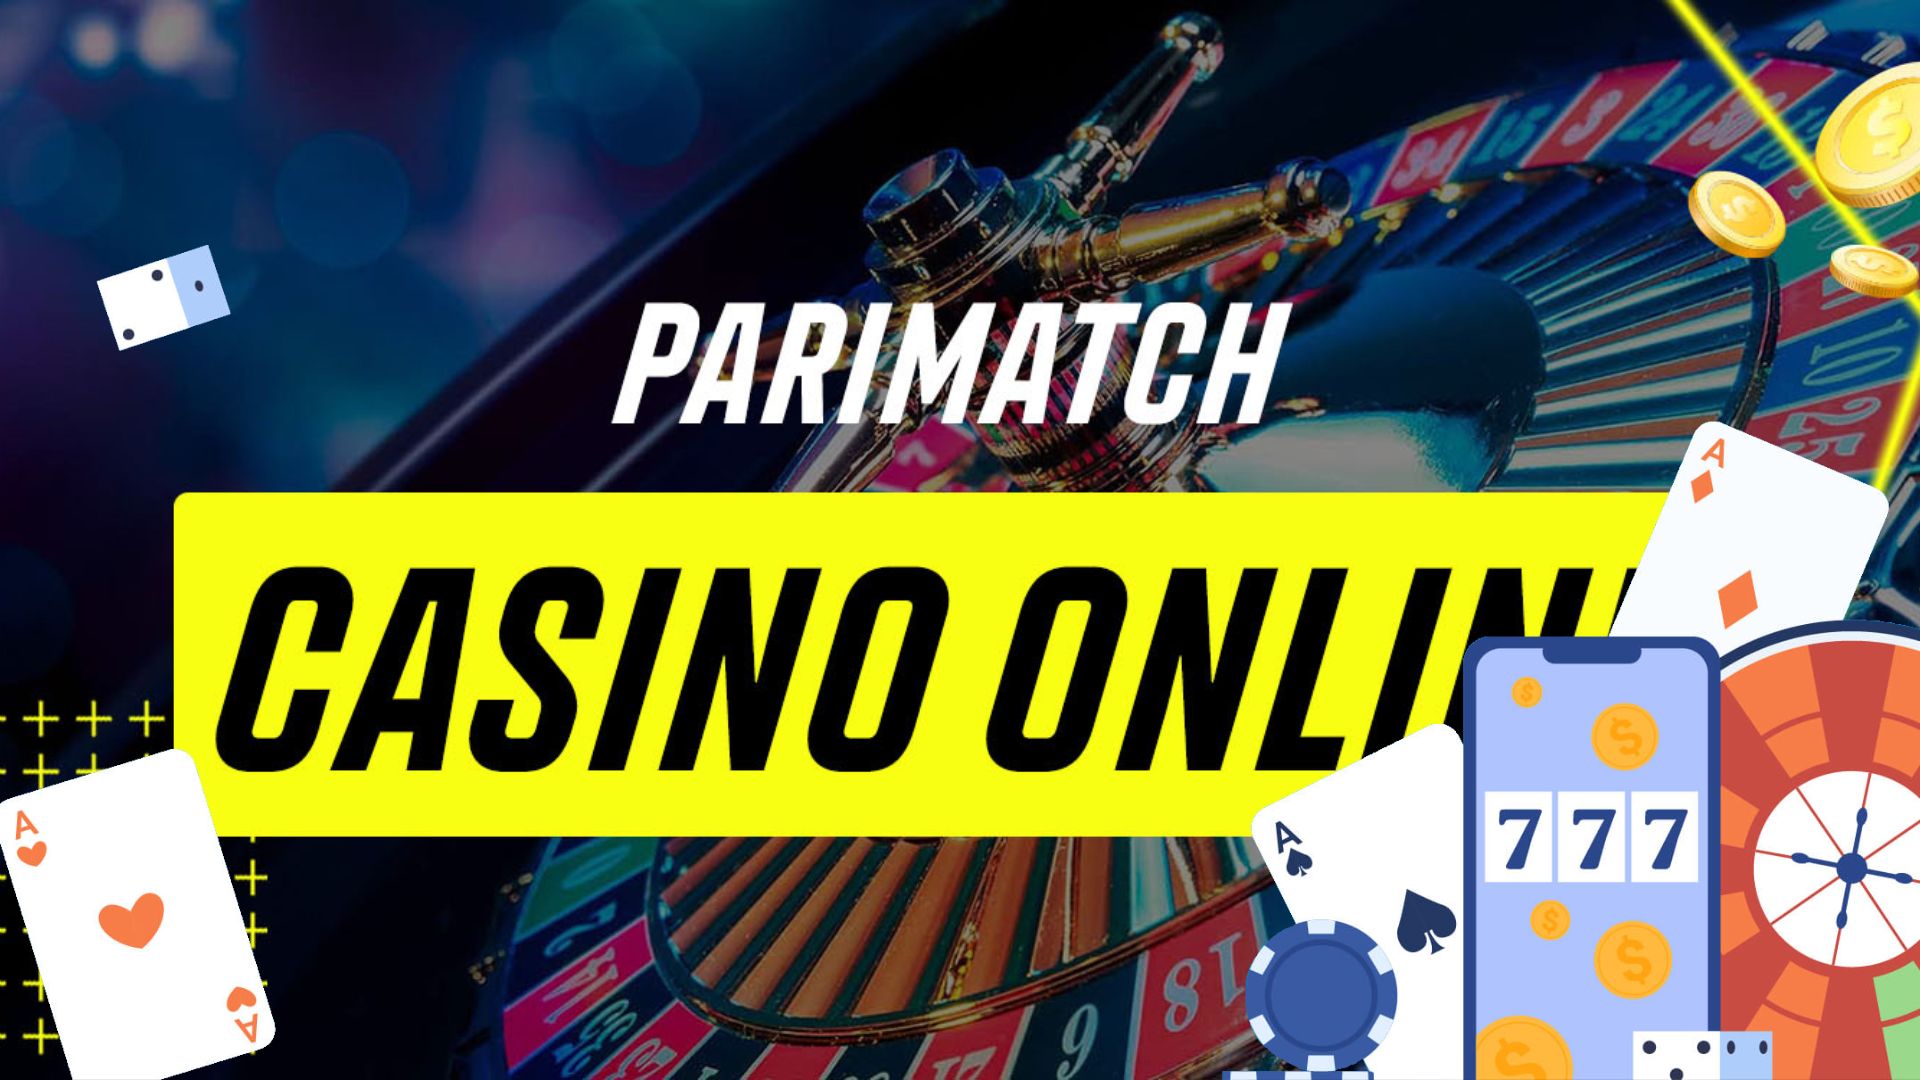 Parimatch Mobile Casino App